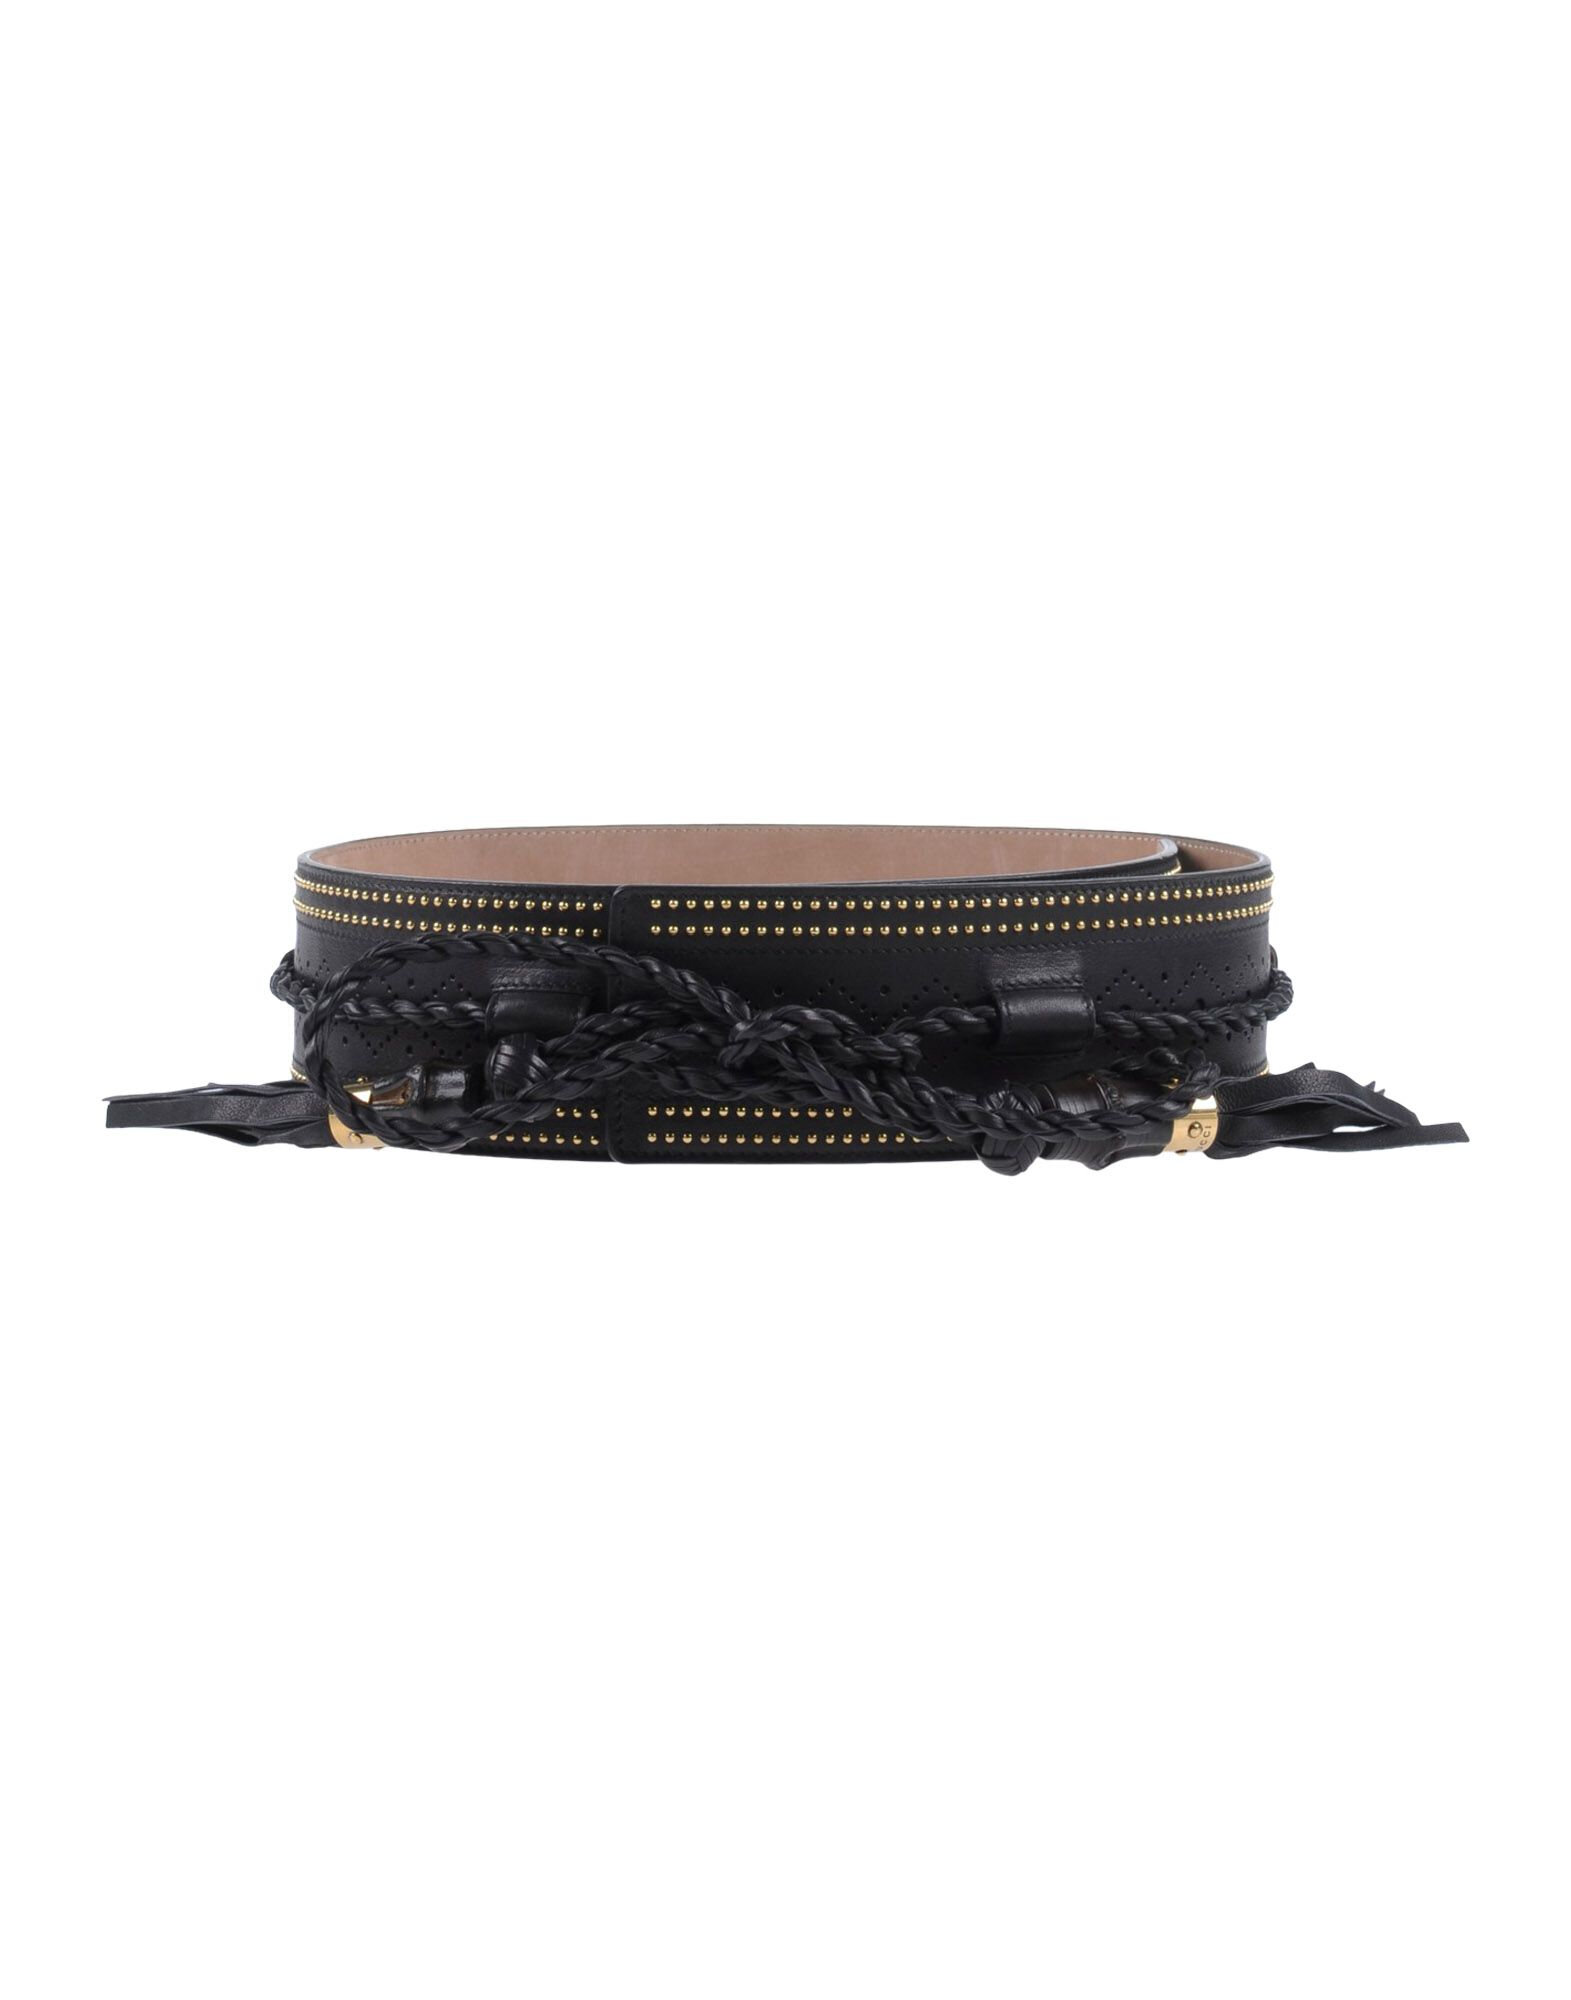 Gucci Studded Rope Belt in Black.jpg